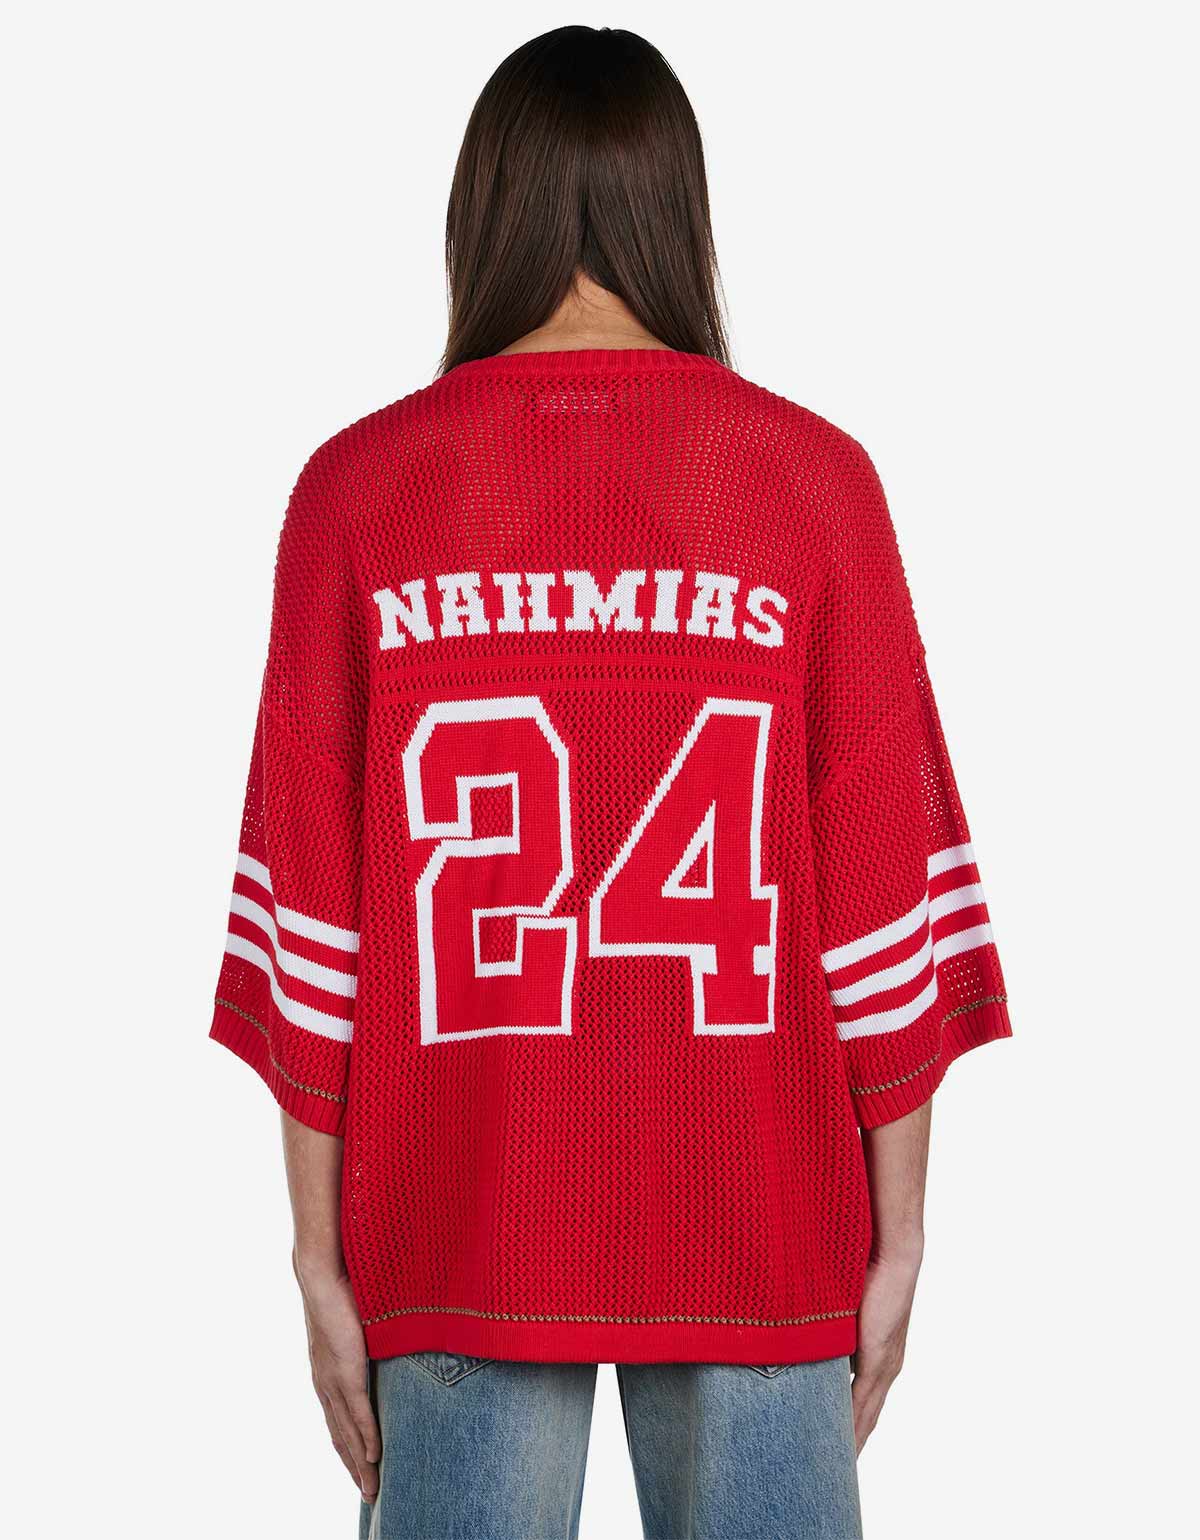 Nahmias Red Knit 24 Football Shirt